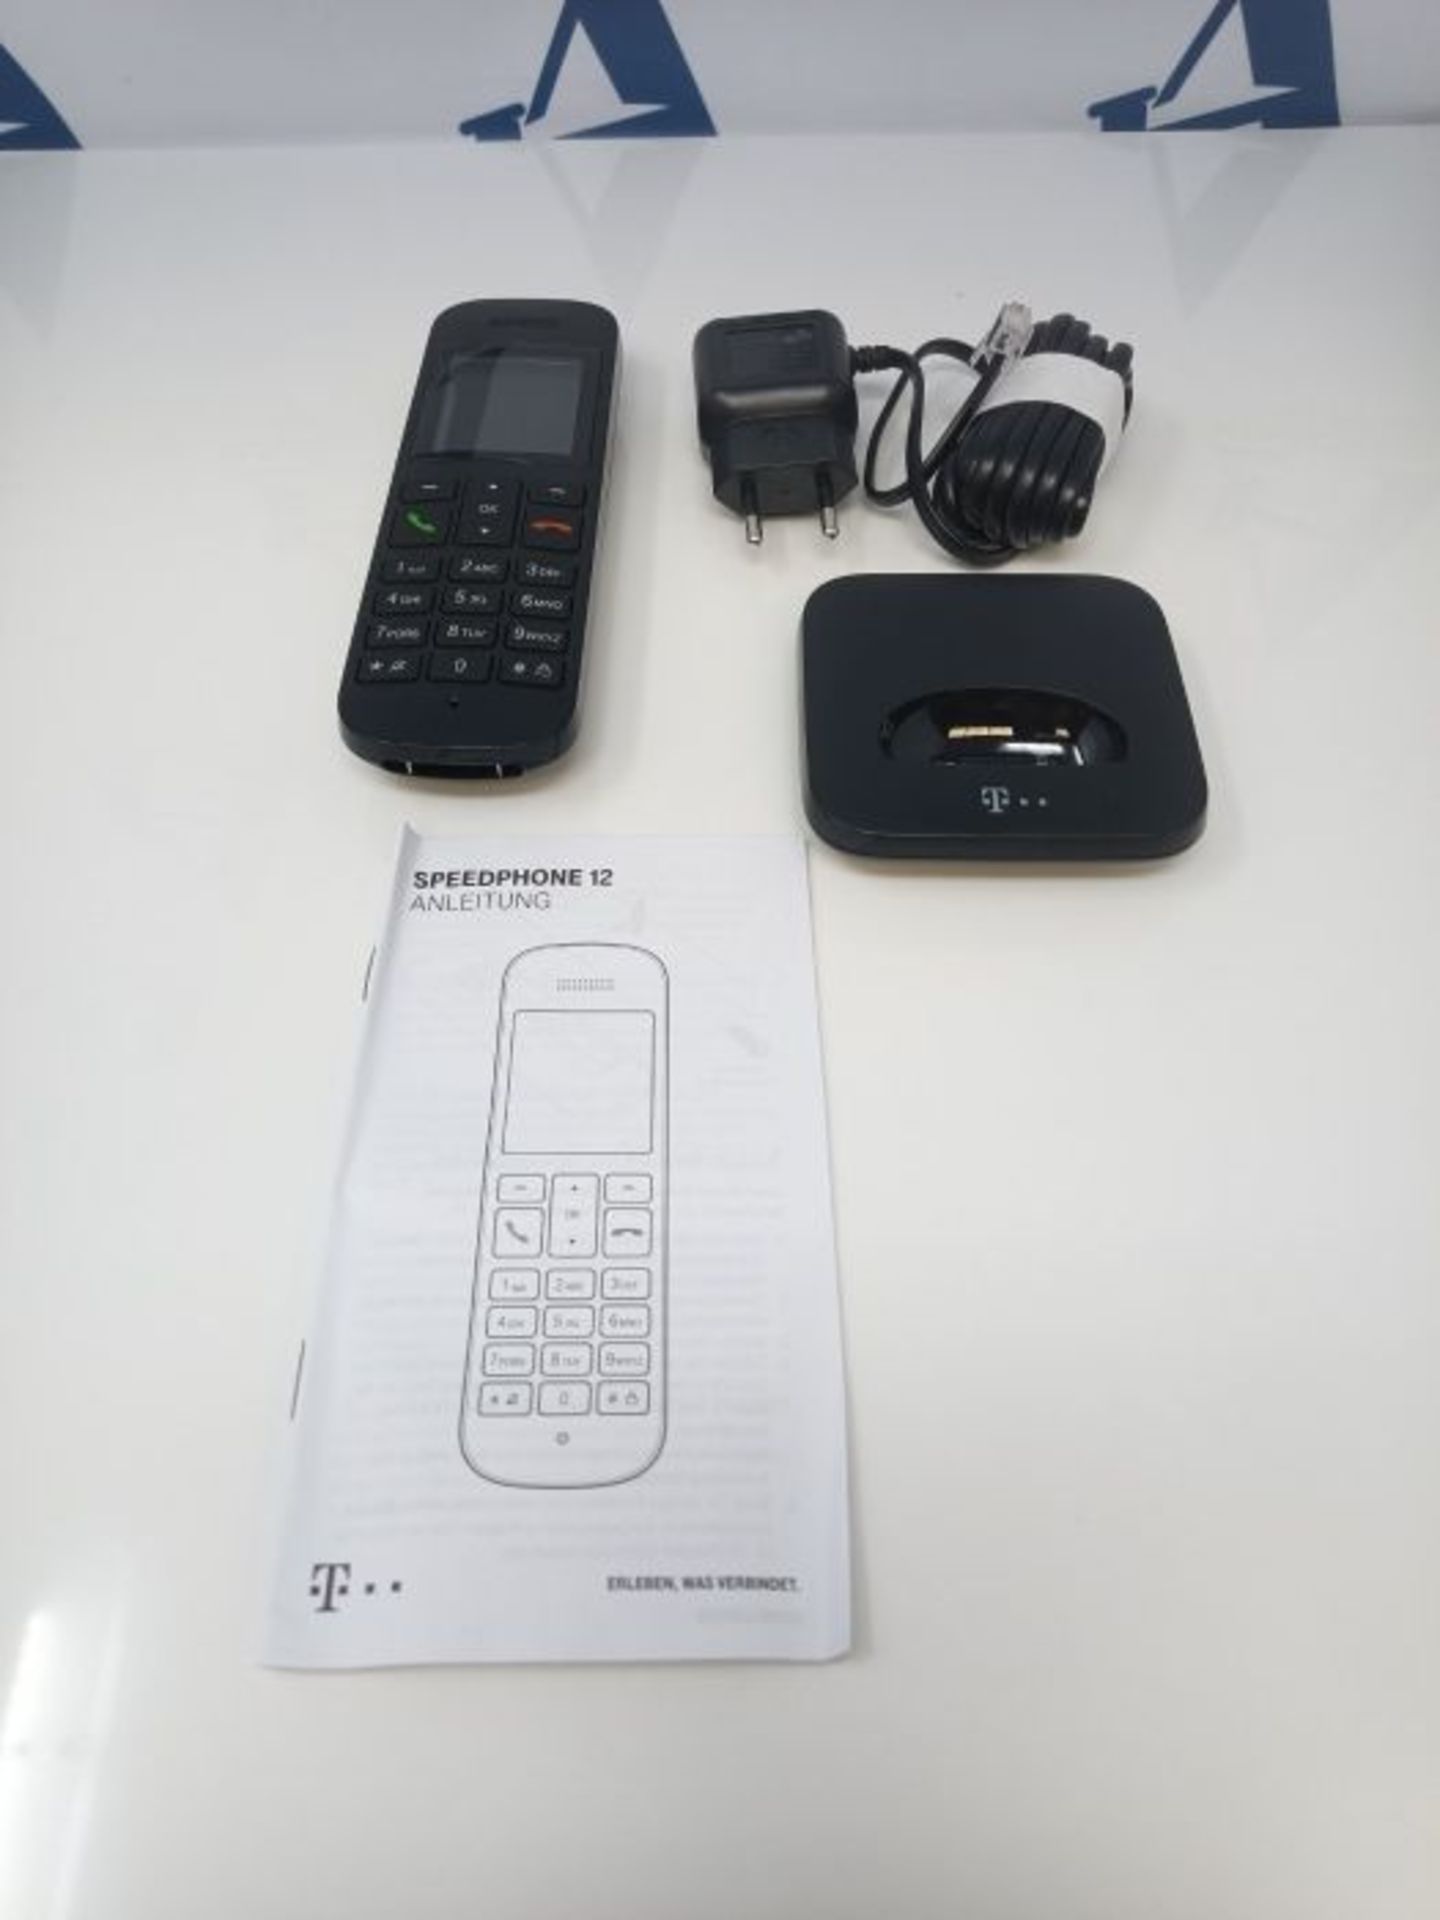 Deutsche Telekom Speedphone 12 landline telephone in black cordless | For use with cur - Image 3 of 3